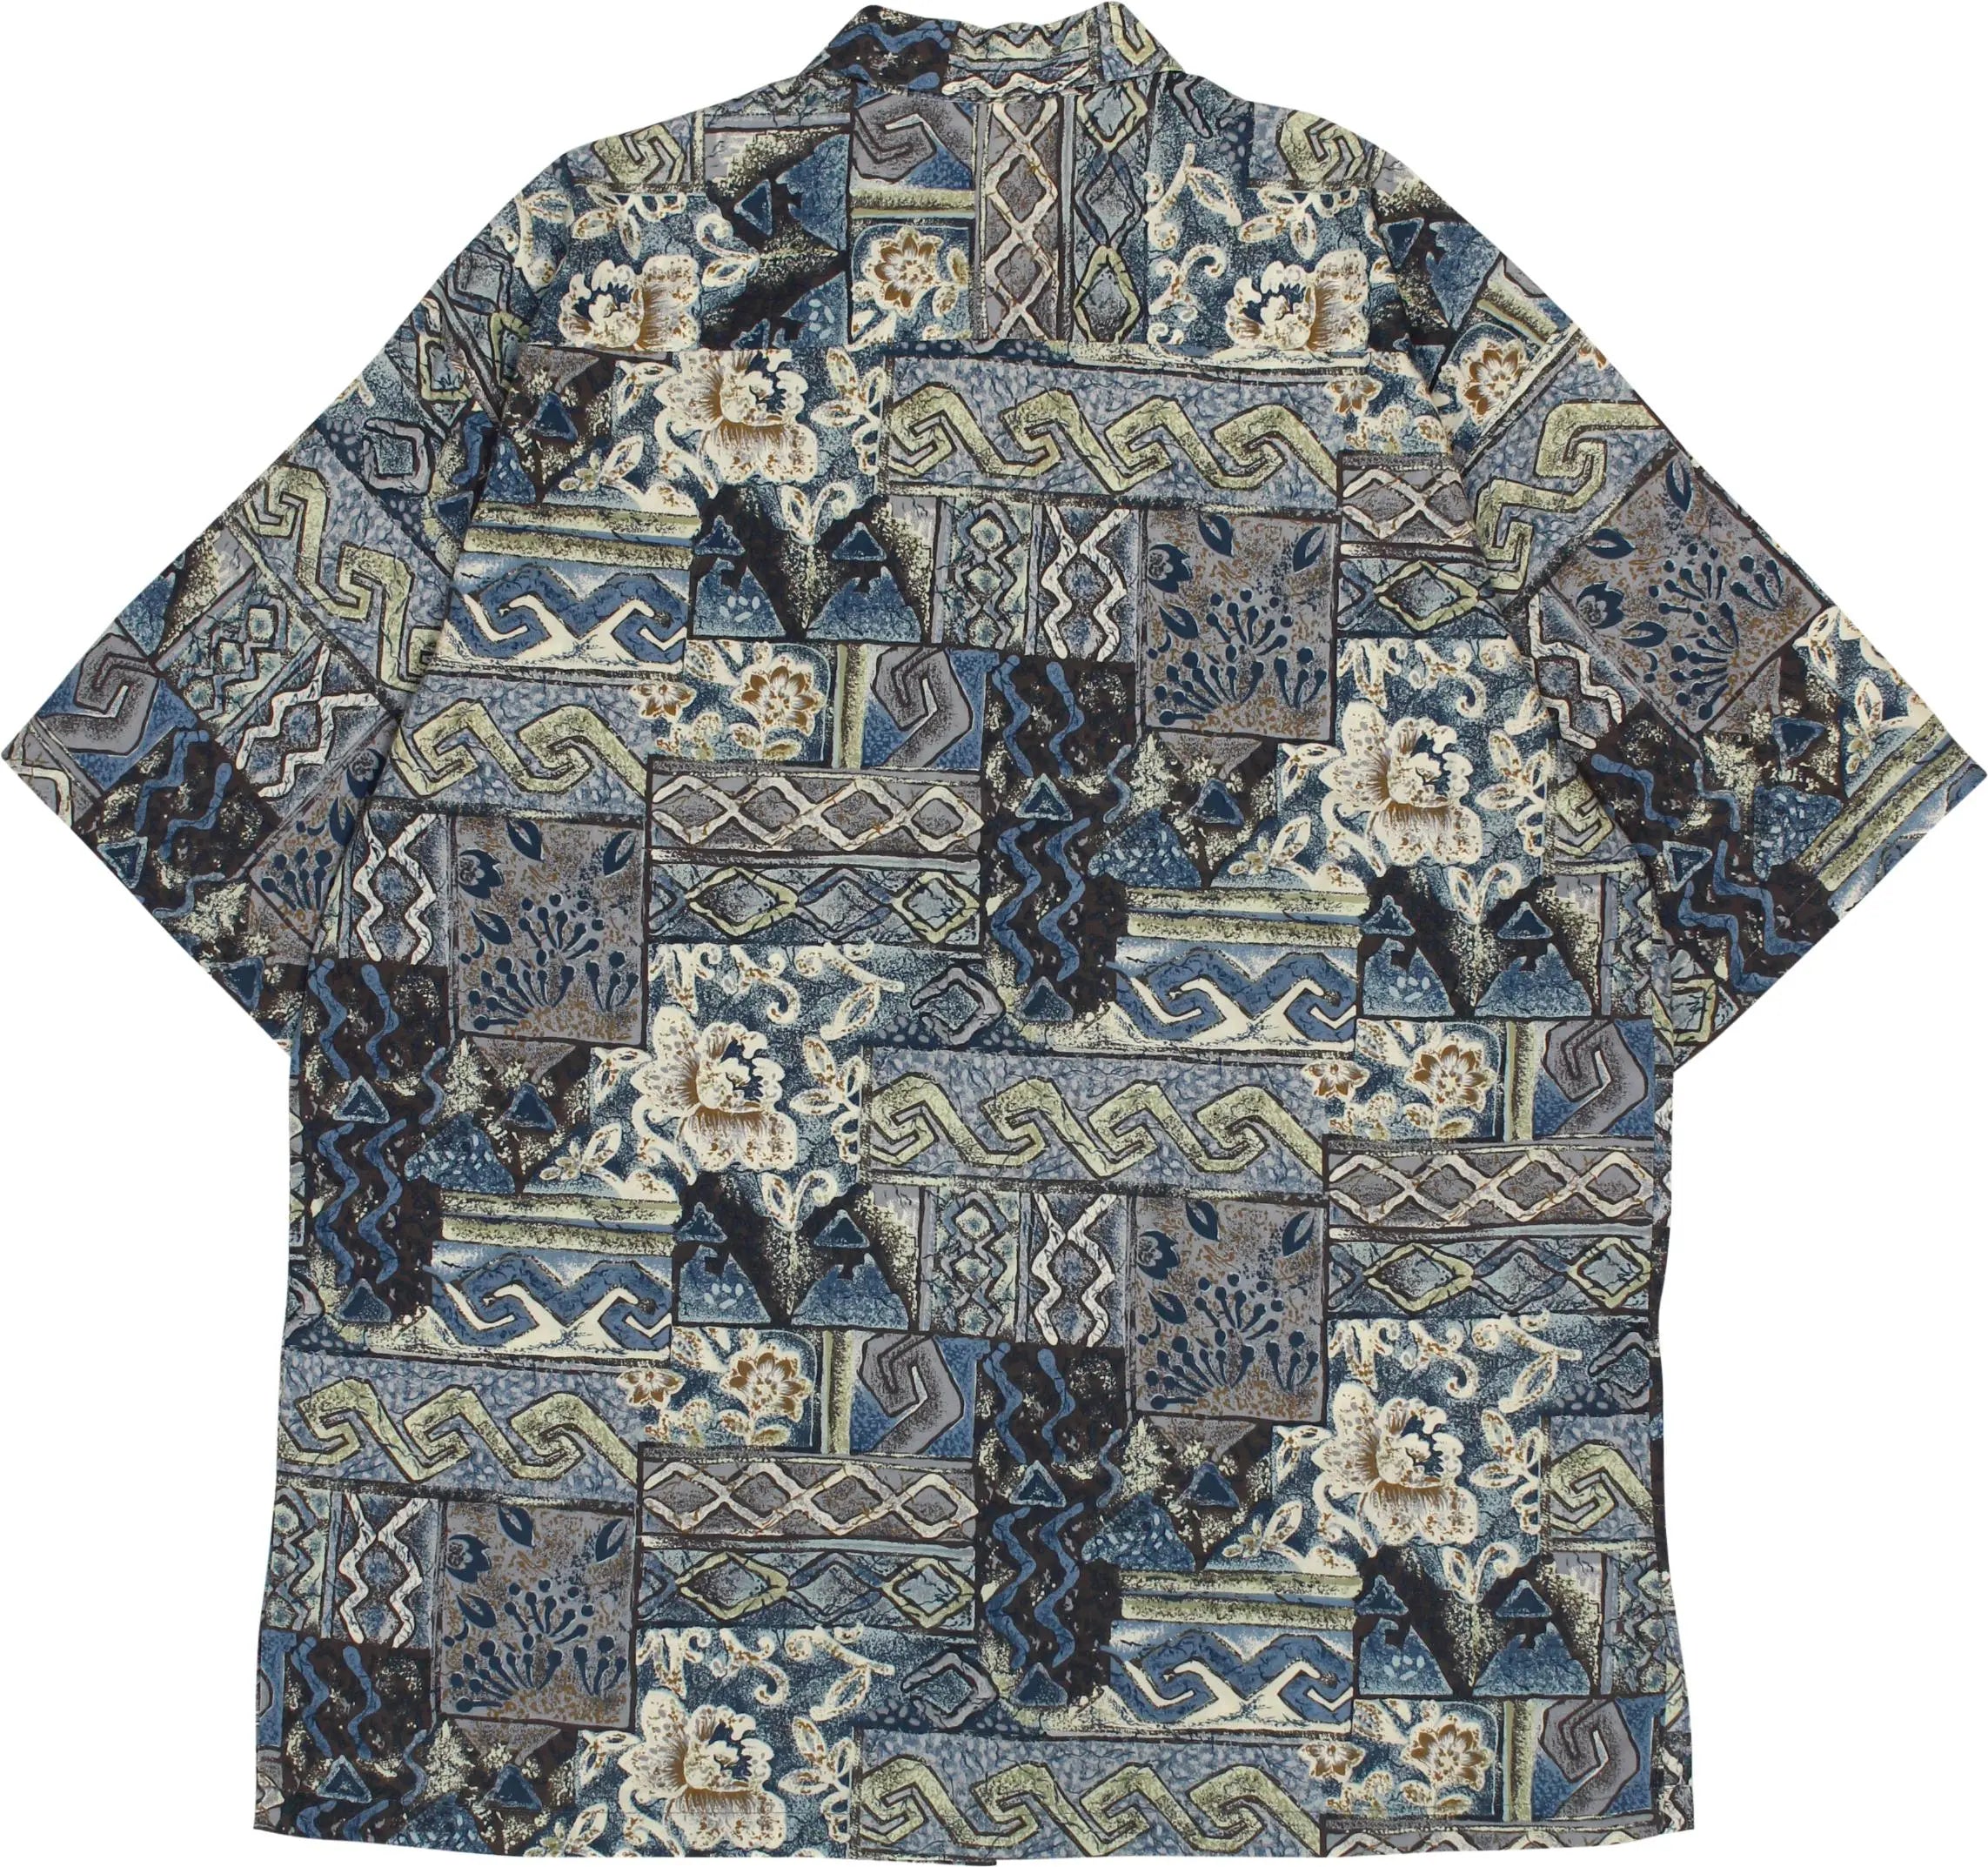 Tori Richard - 90s Hawaiian Shirt- ThriftTale.com - Vintage and second handclothing